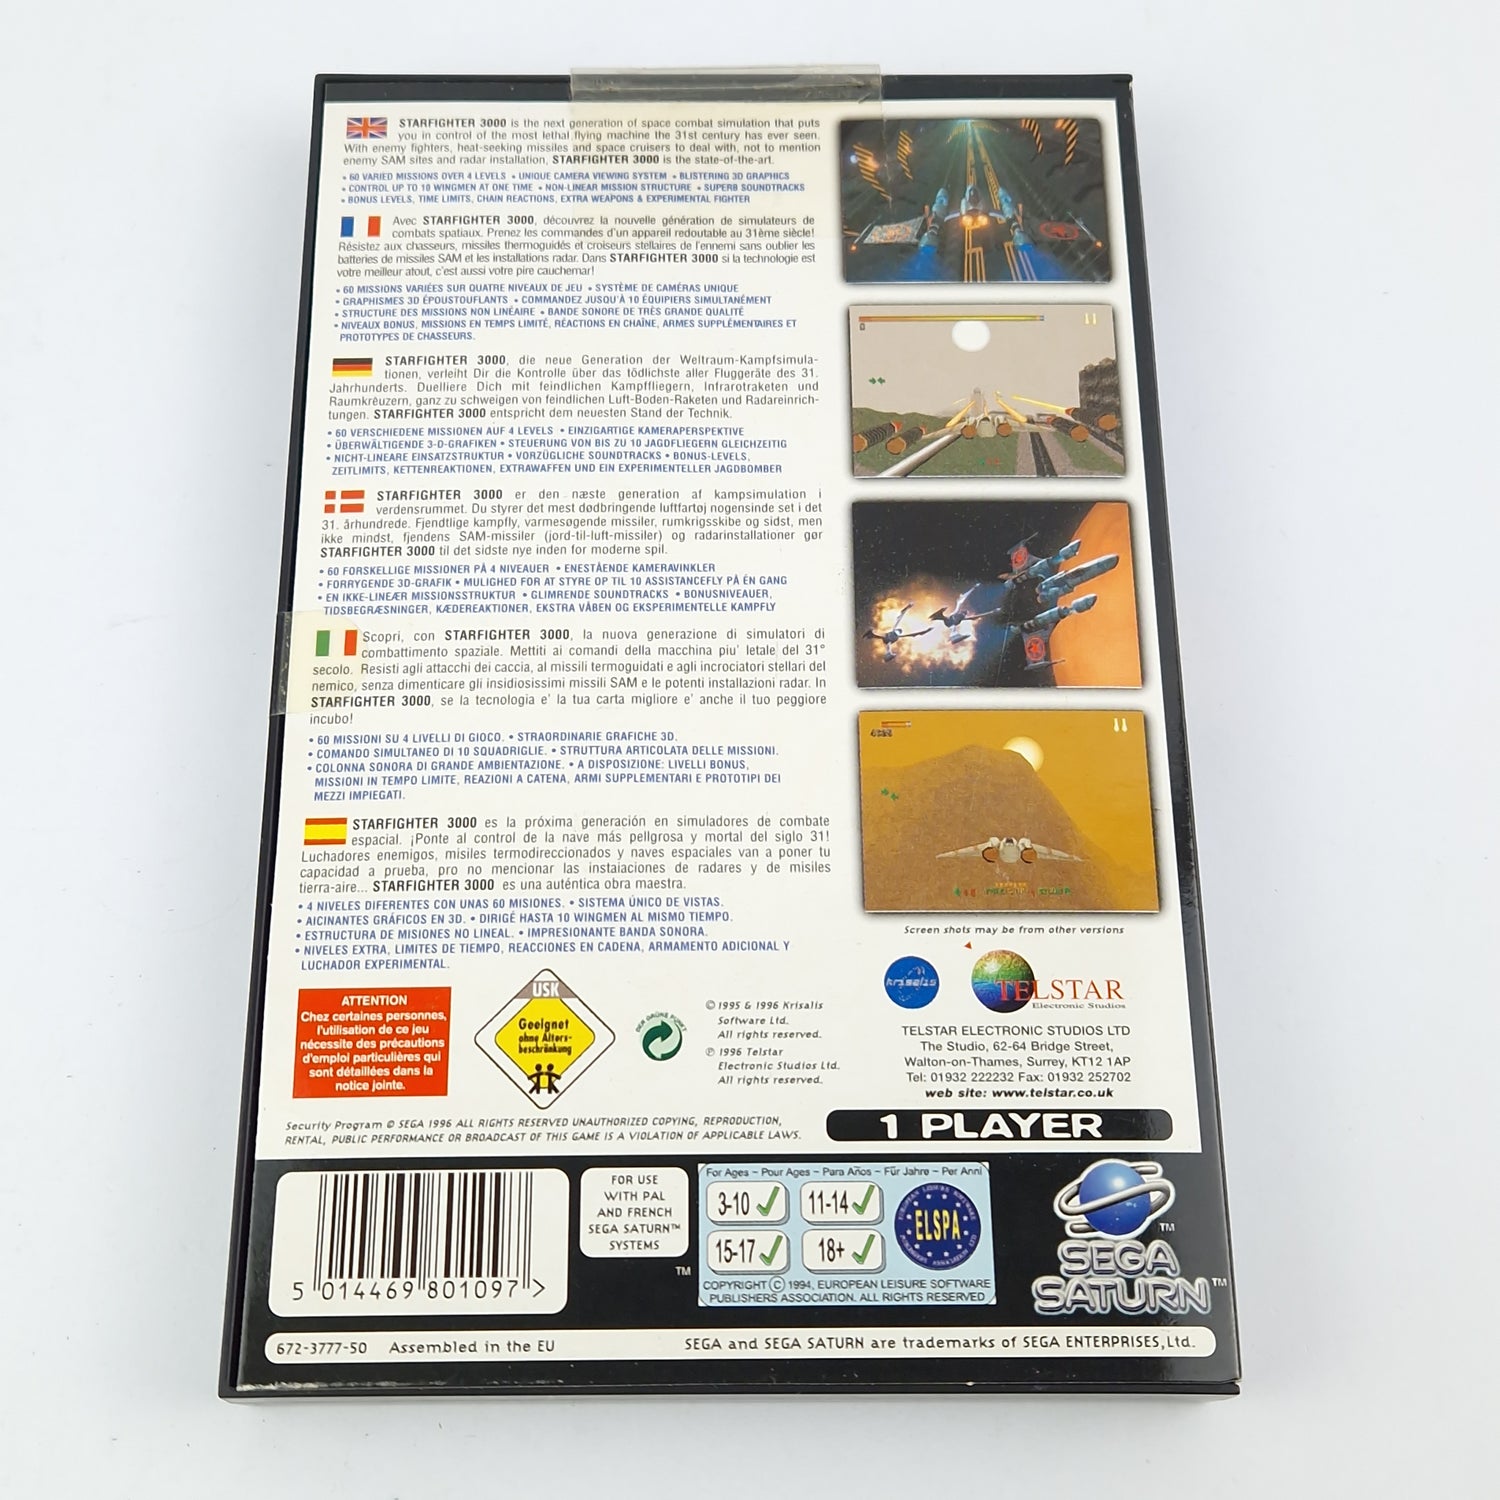 Sega Saturn game: Starfighter 3000 - CD instructions OVP cib / PAL disk system